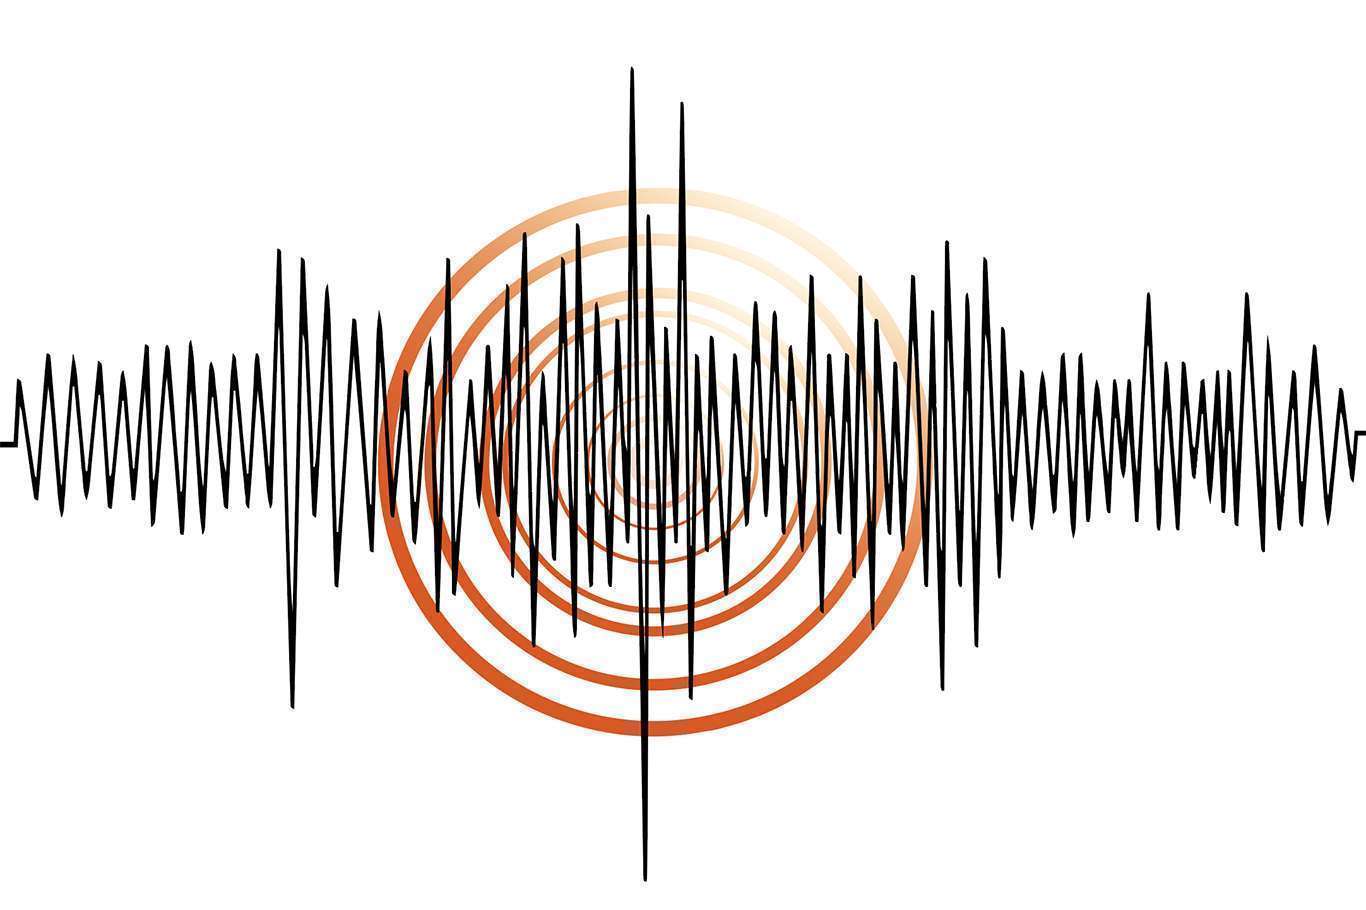 A 3.5 magnitude earthquake jolts eastern Turkey